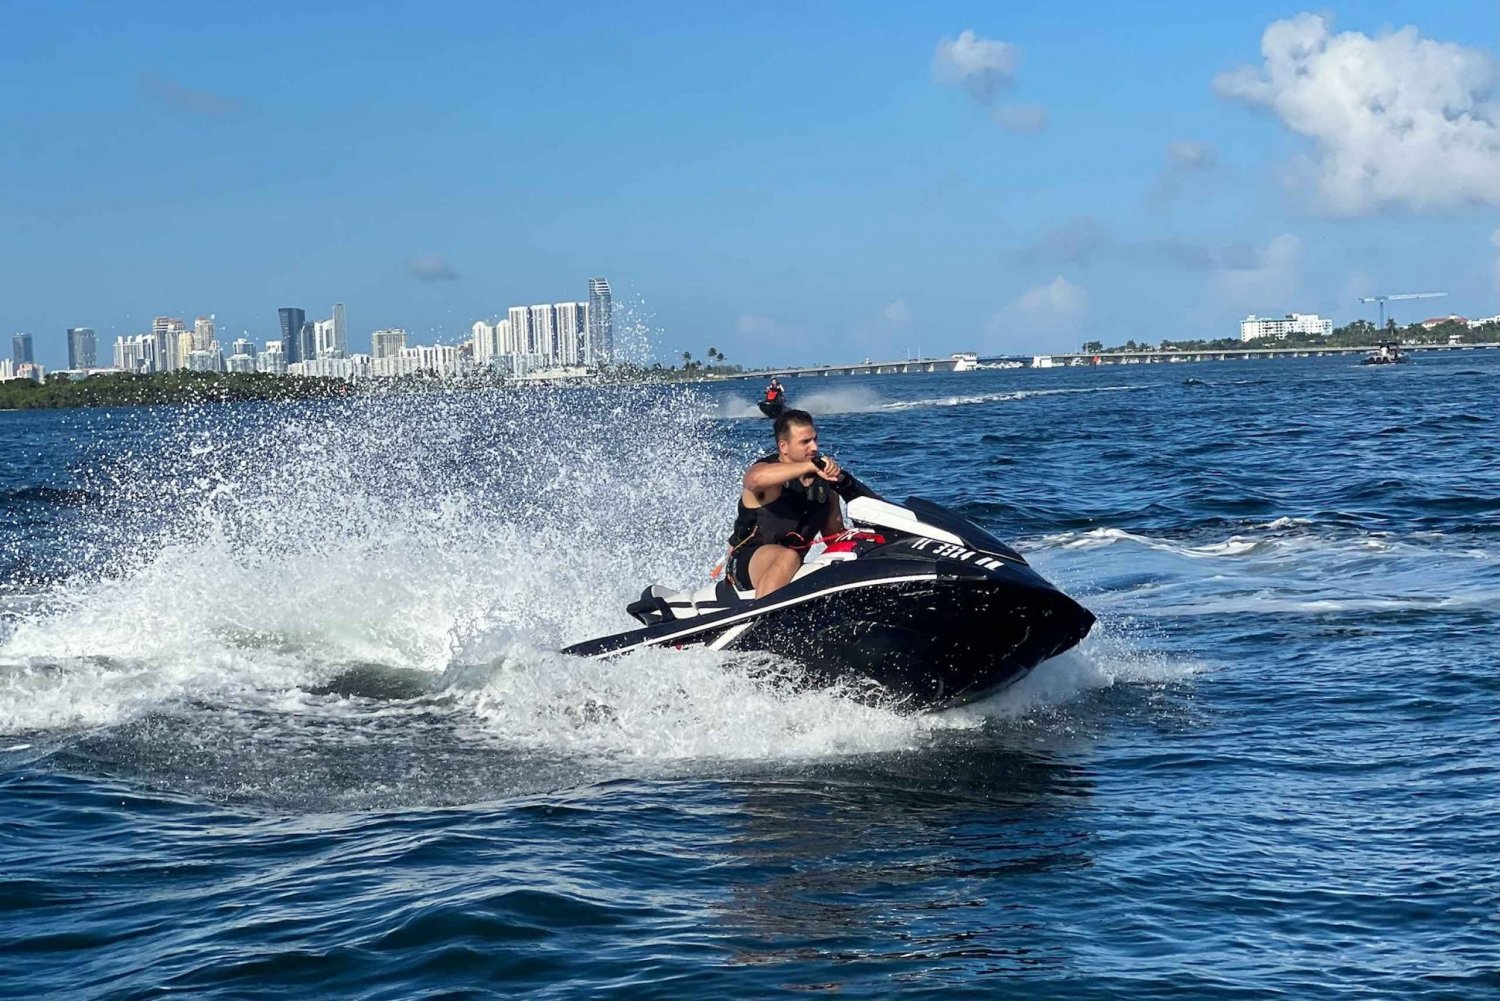 Miami: Biscayne Bay Jet Ski Rental to Explore Biscayne Bay